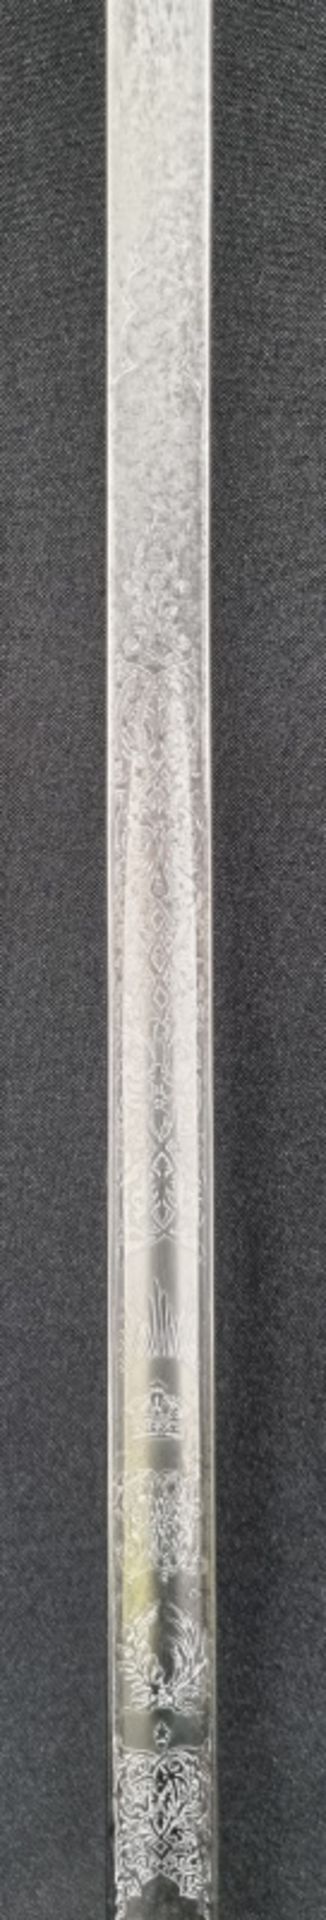 S J Pillin Royal Engineers Ceremonial Sword - serial number 100247 - Image 5 of 10